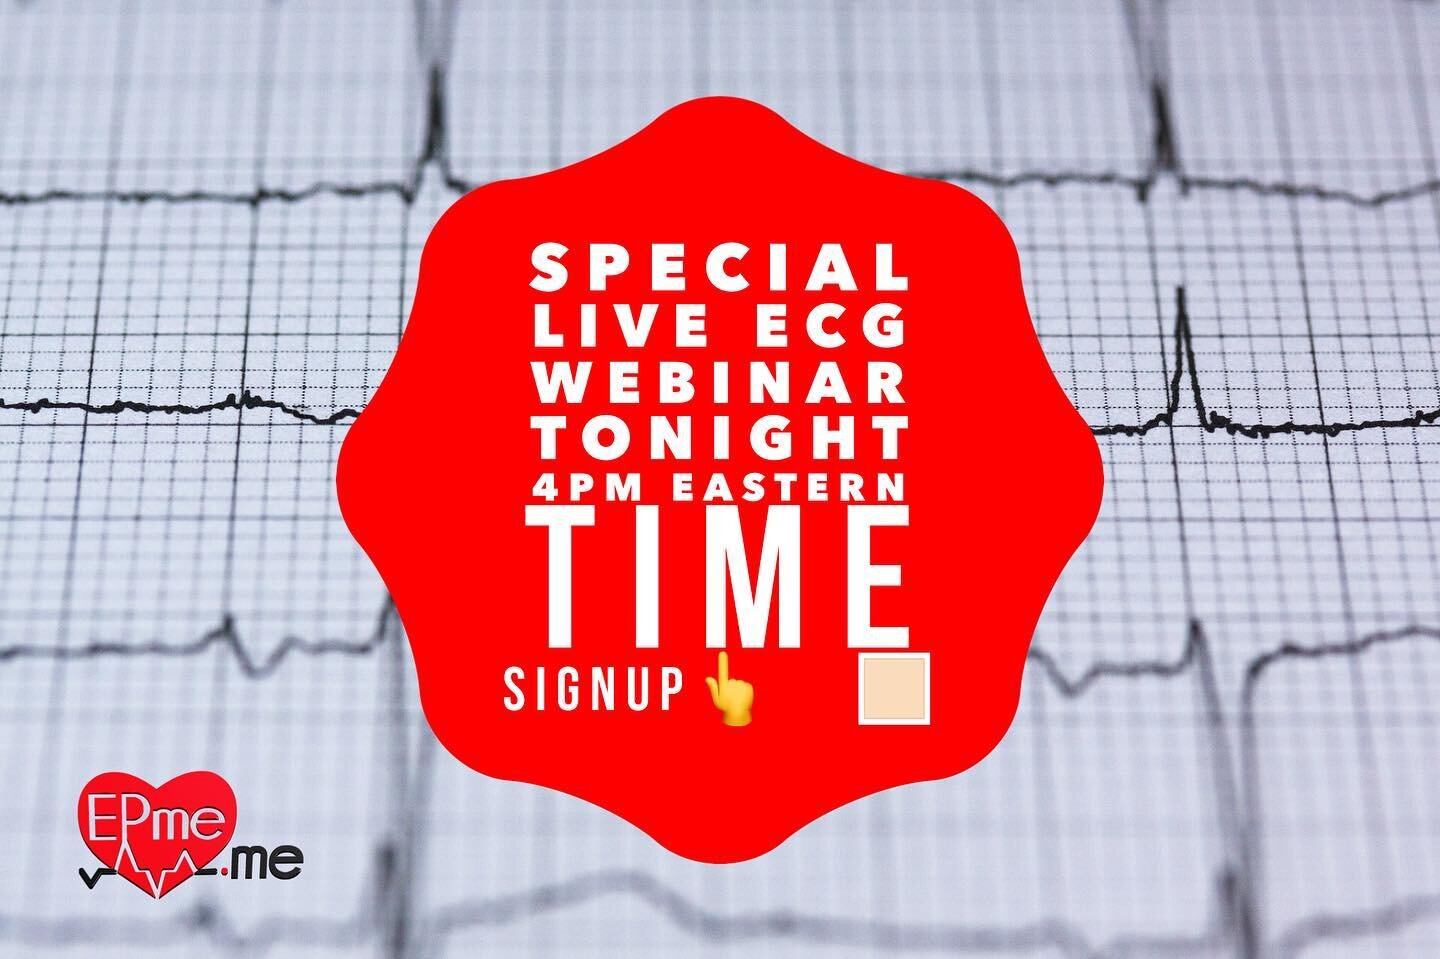 Signup.epme.me
To Join The Special ECG Webinar Tonight!! #pacing #cardiology #cardiologynurse
#electrophysiology #ekg #ecg #heart
#heartrhythm #eps #ep #health
#medstudent #med #medic #medicine
#medical #catheterization #ablation
#cardiacablation #ic